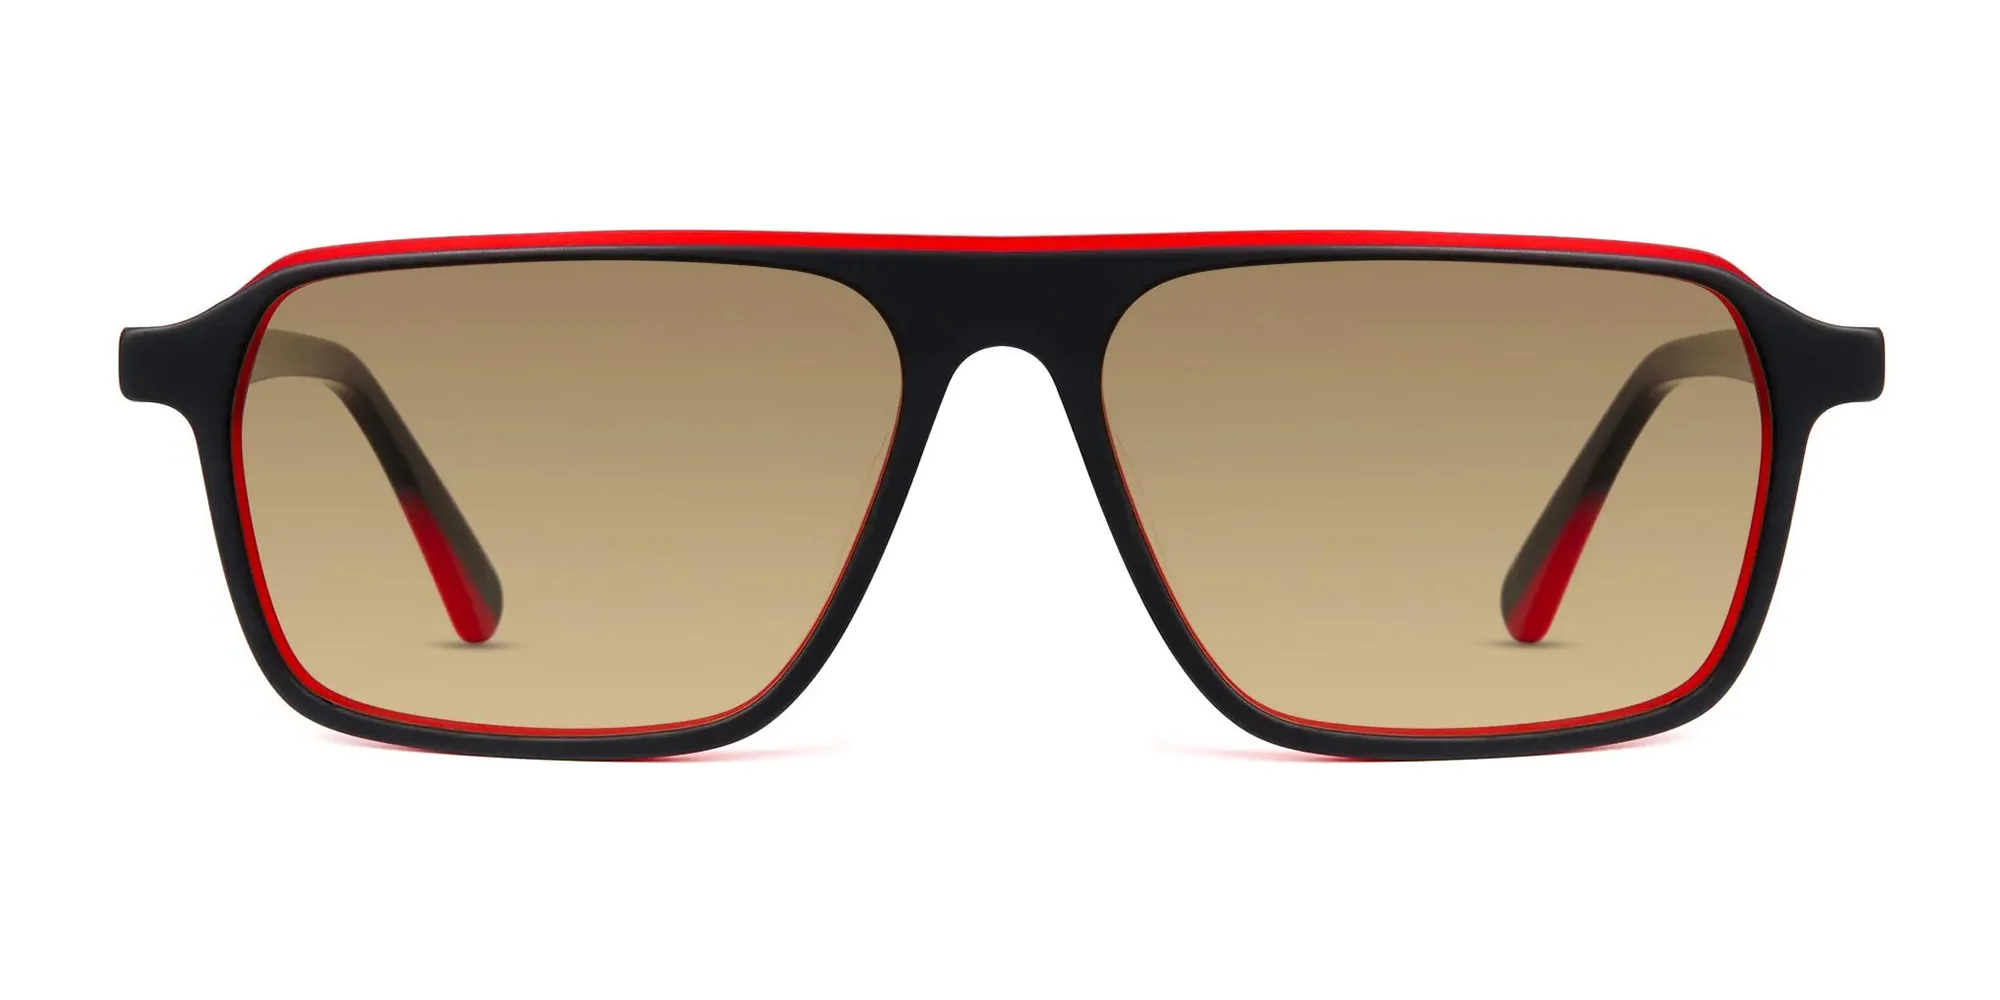 black and red rectangular full rim brown tinted sunglasses frames